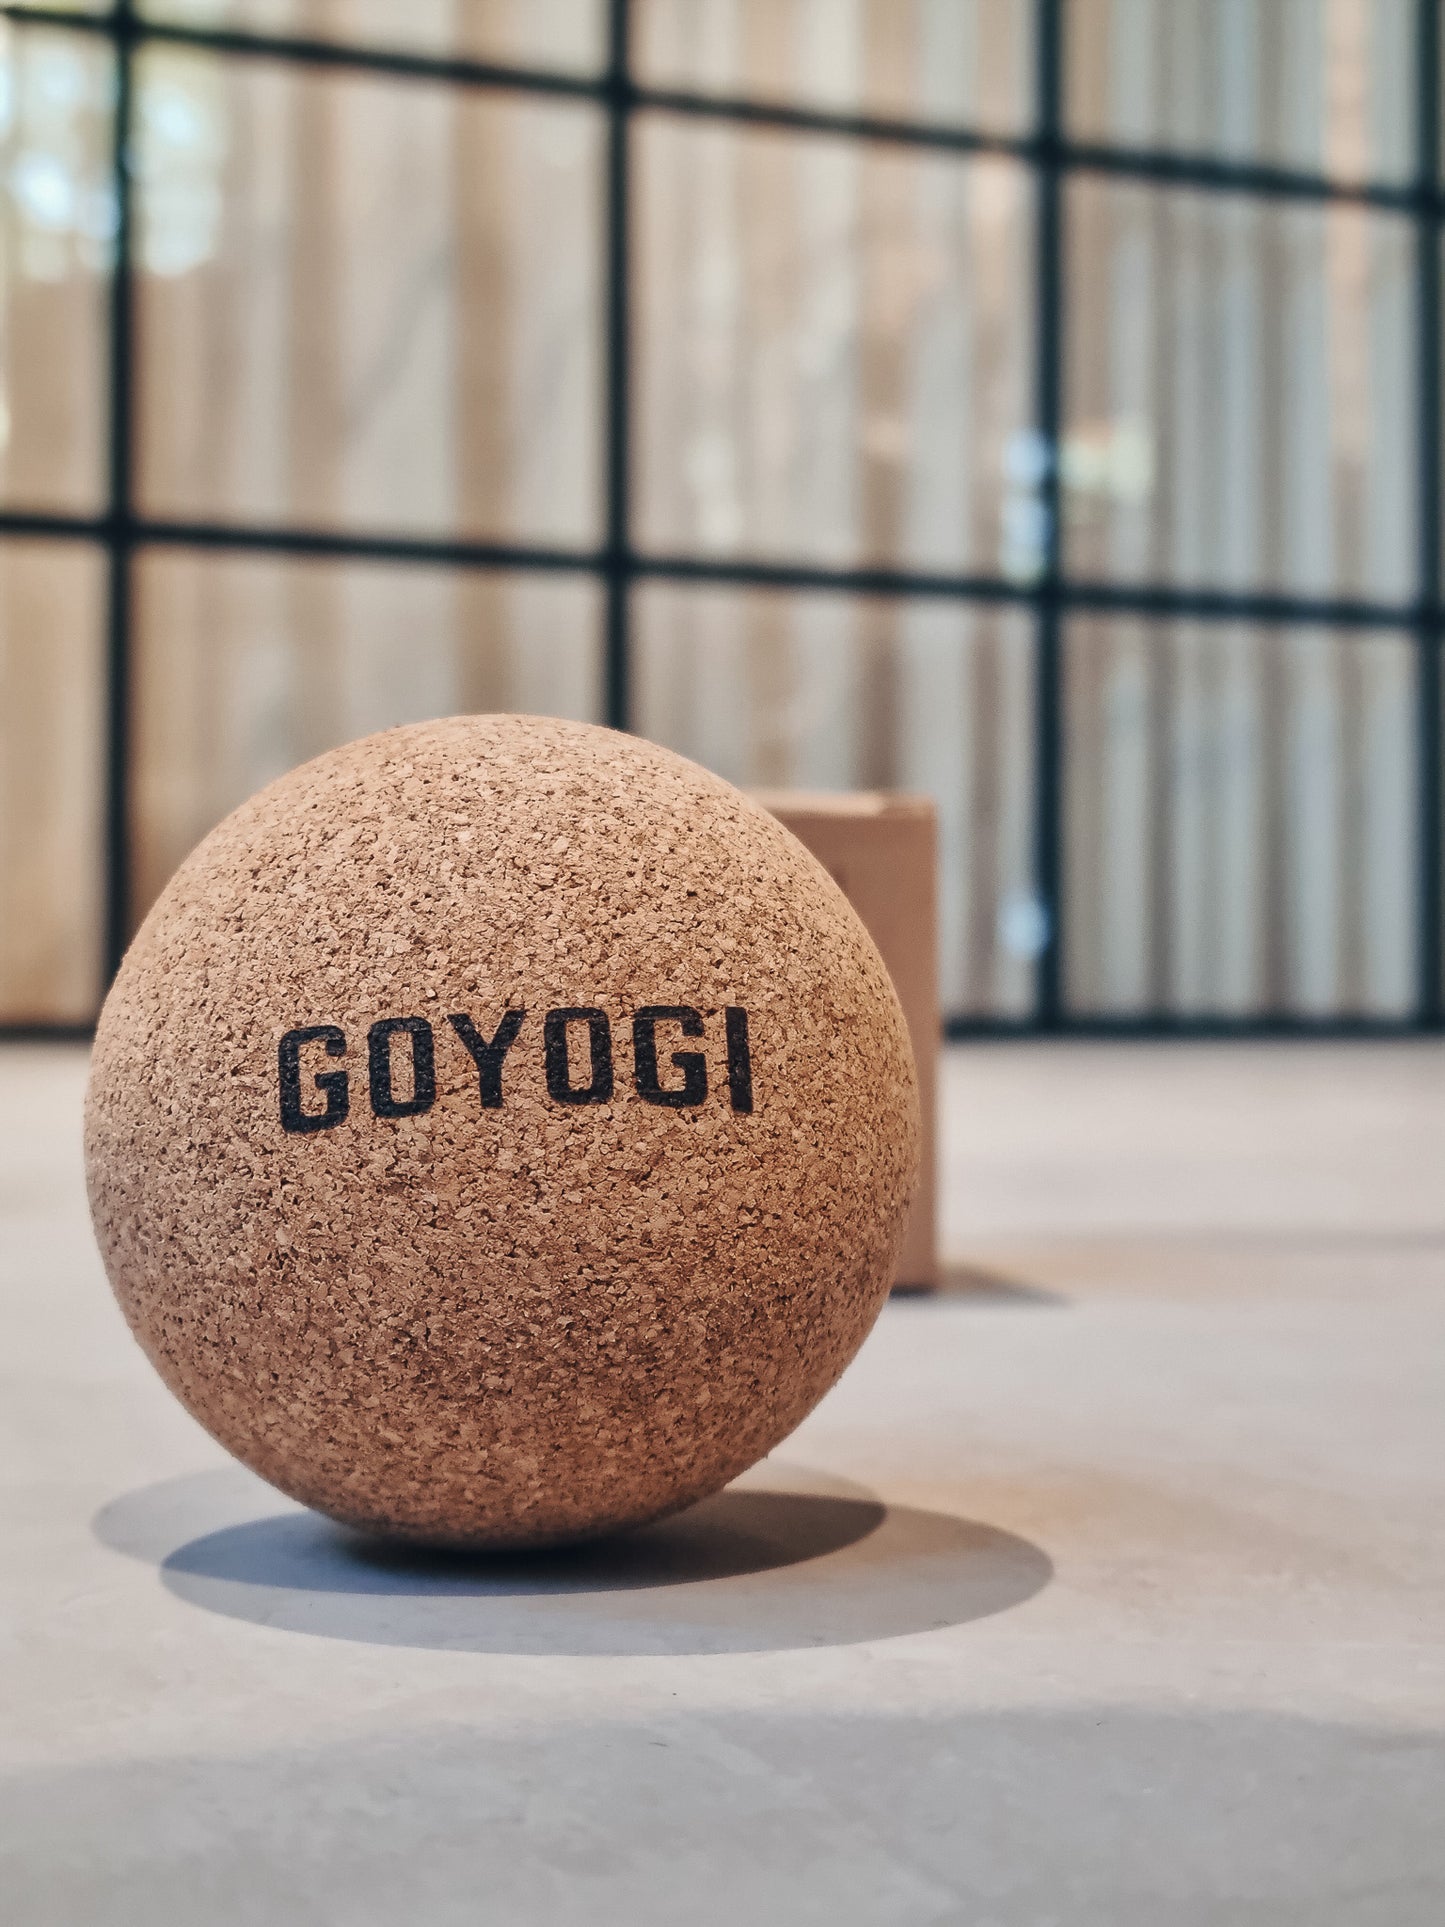 GOYOGI Trigger Point Ball - Cork